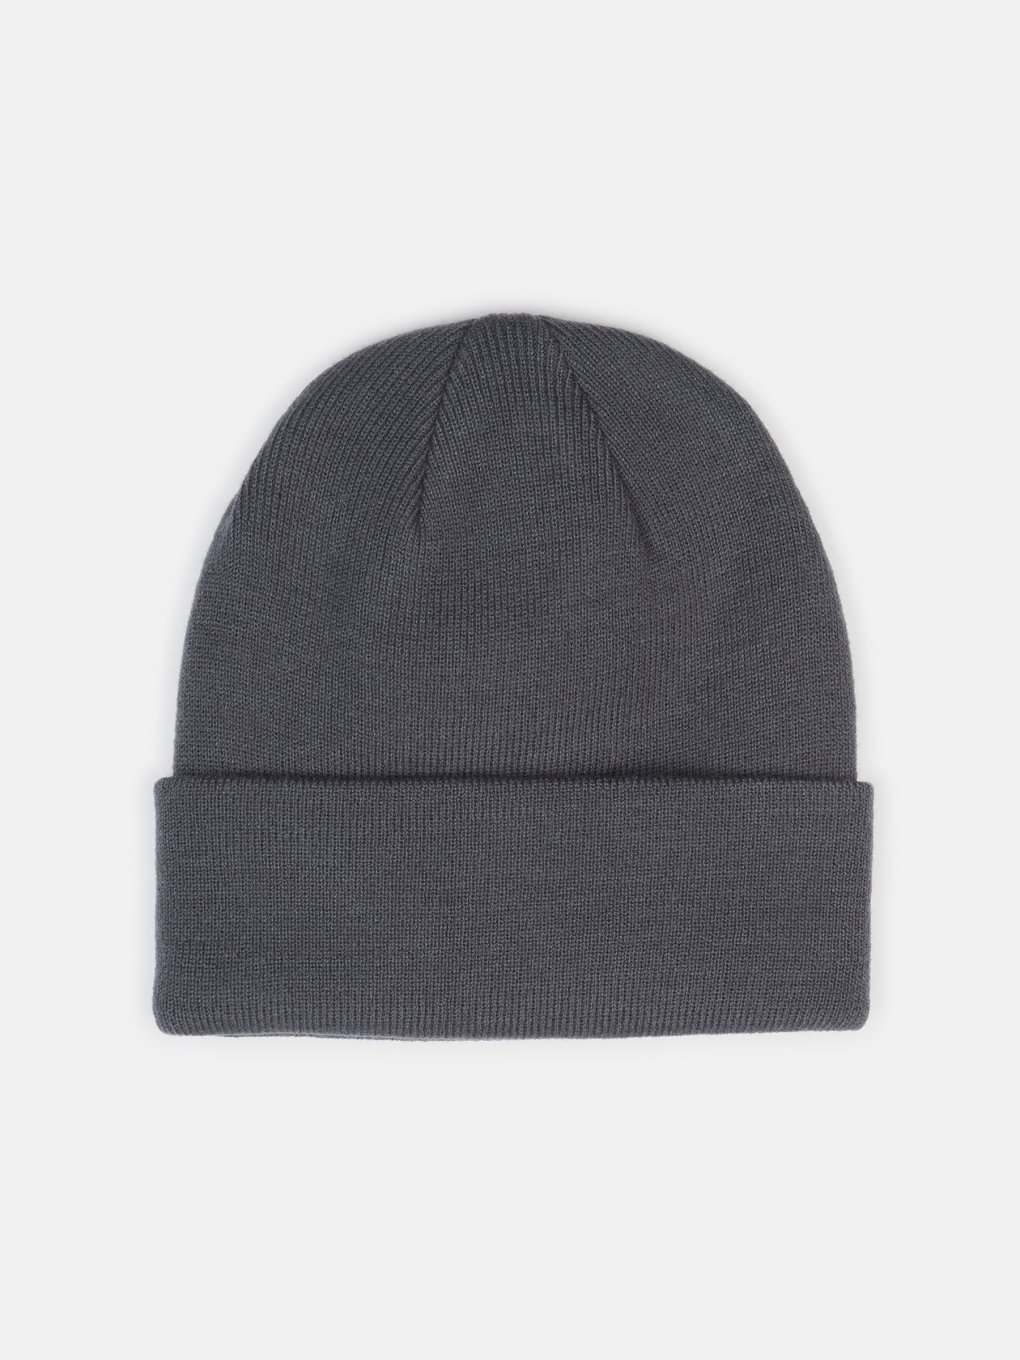 Basic knitted cap